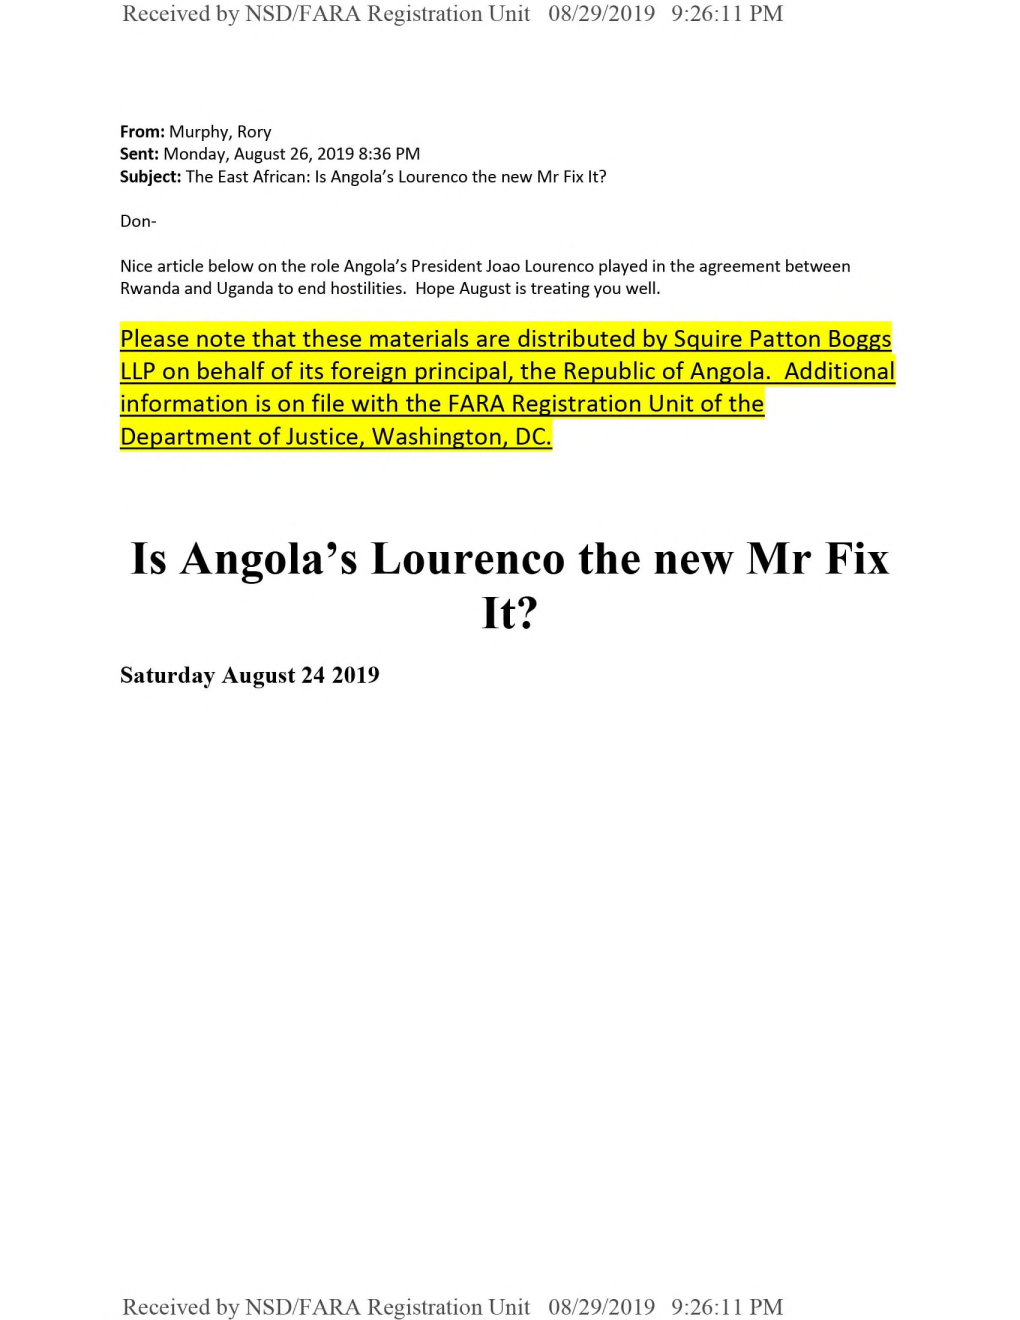 Is Angola's Lourenco the New Mr Fix It?